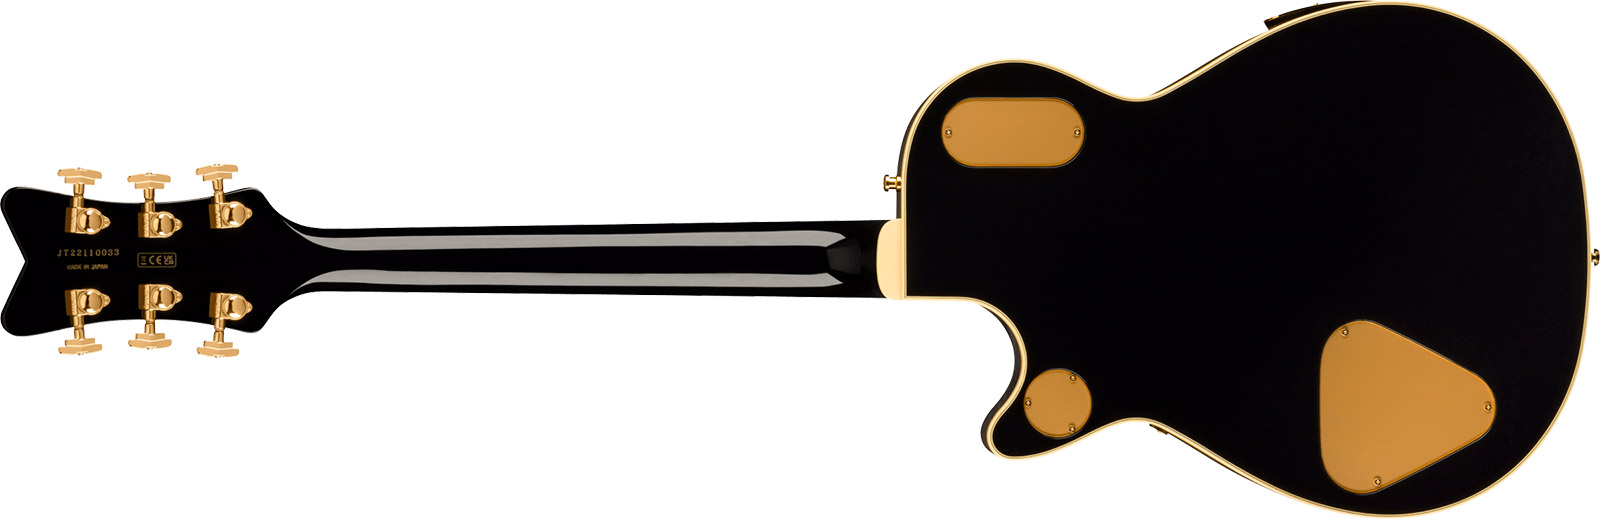 Gretsch G6134tg Paisley Penguin Bigsby Pro Jap 2h Trem Eb - Black Paisley - Enkel gesneden elektrische gitaar - Variation 1